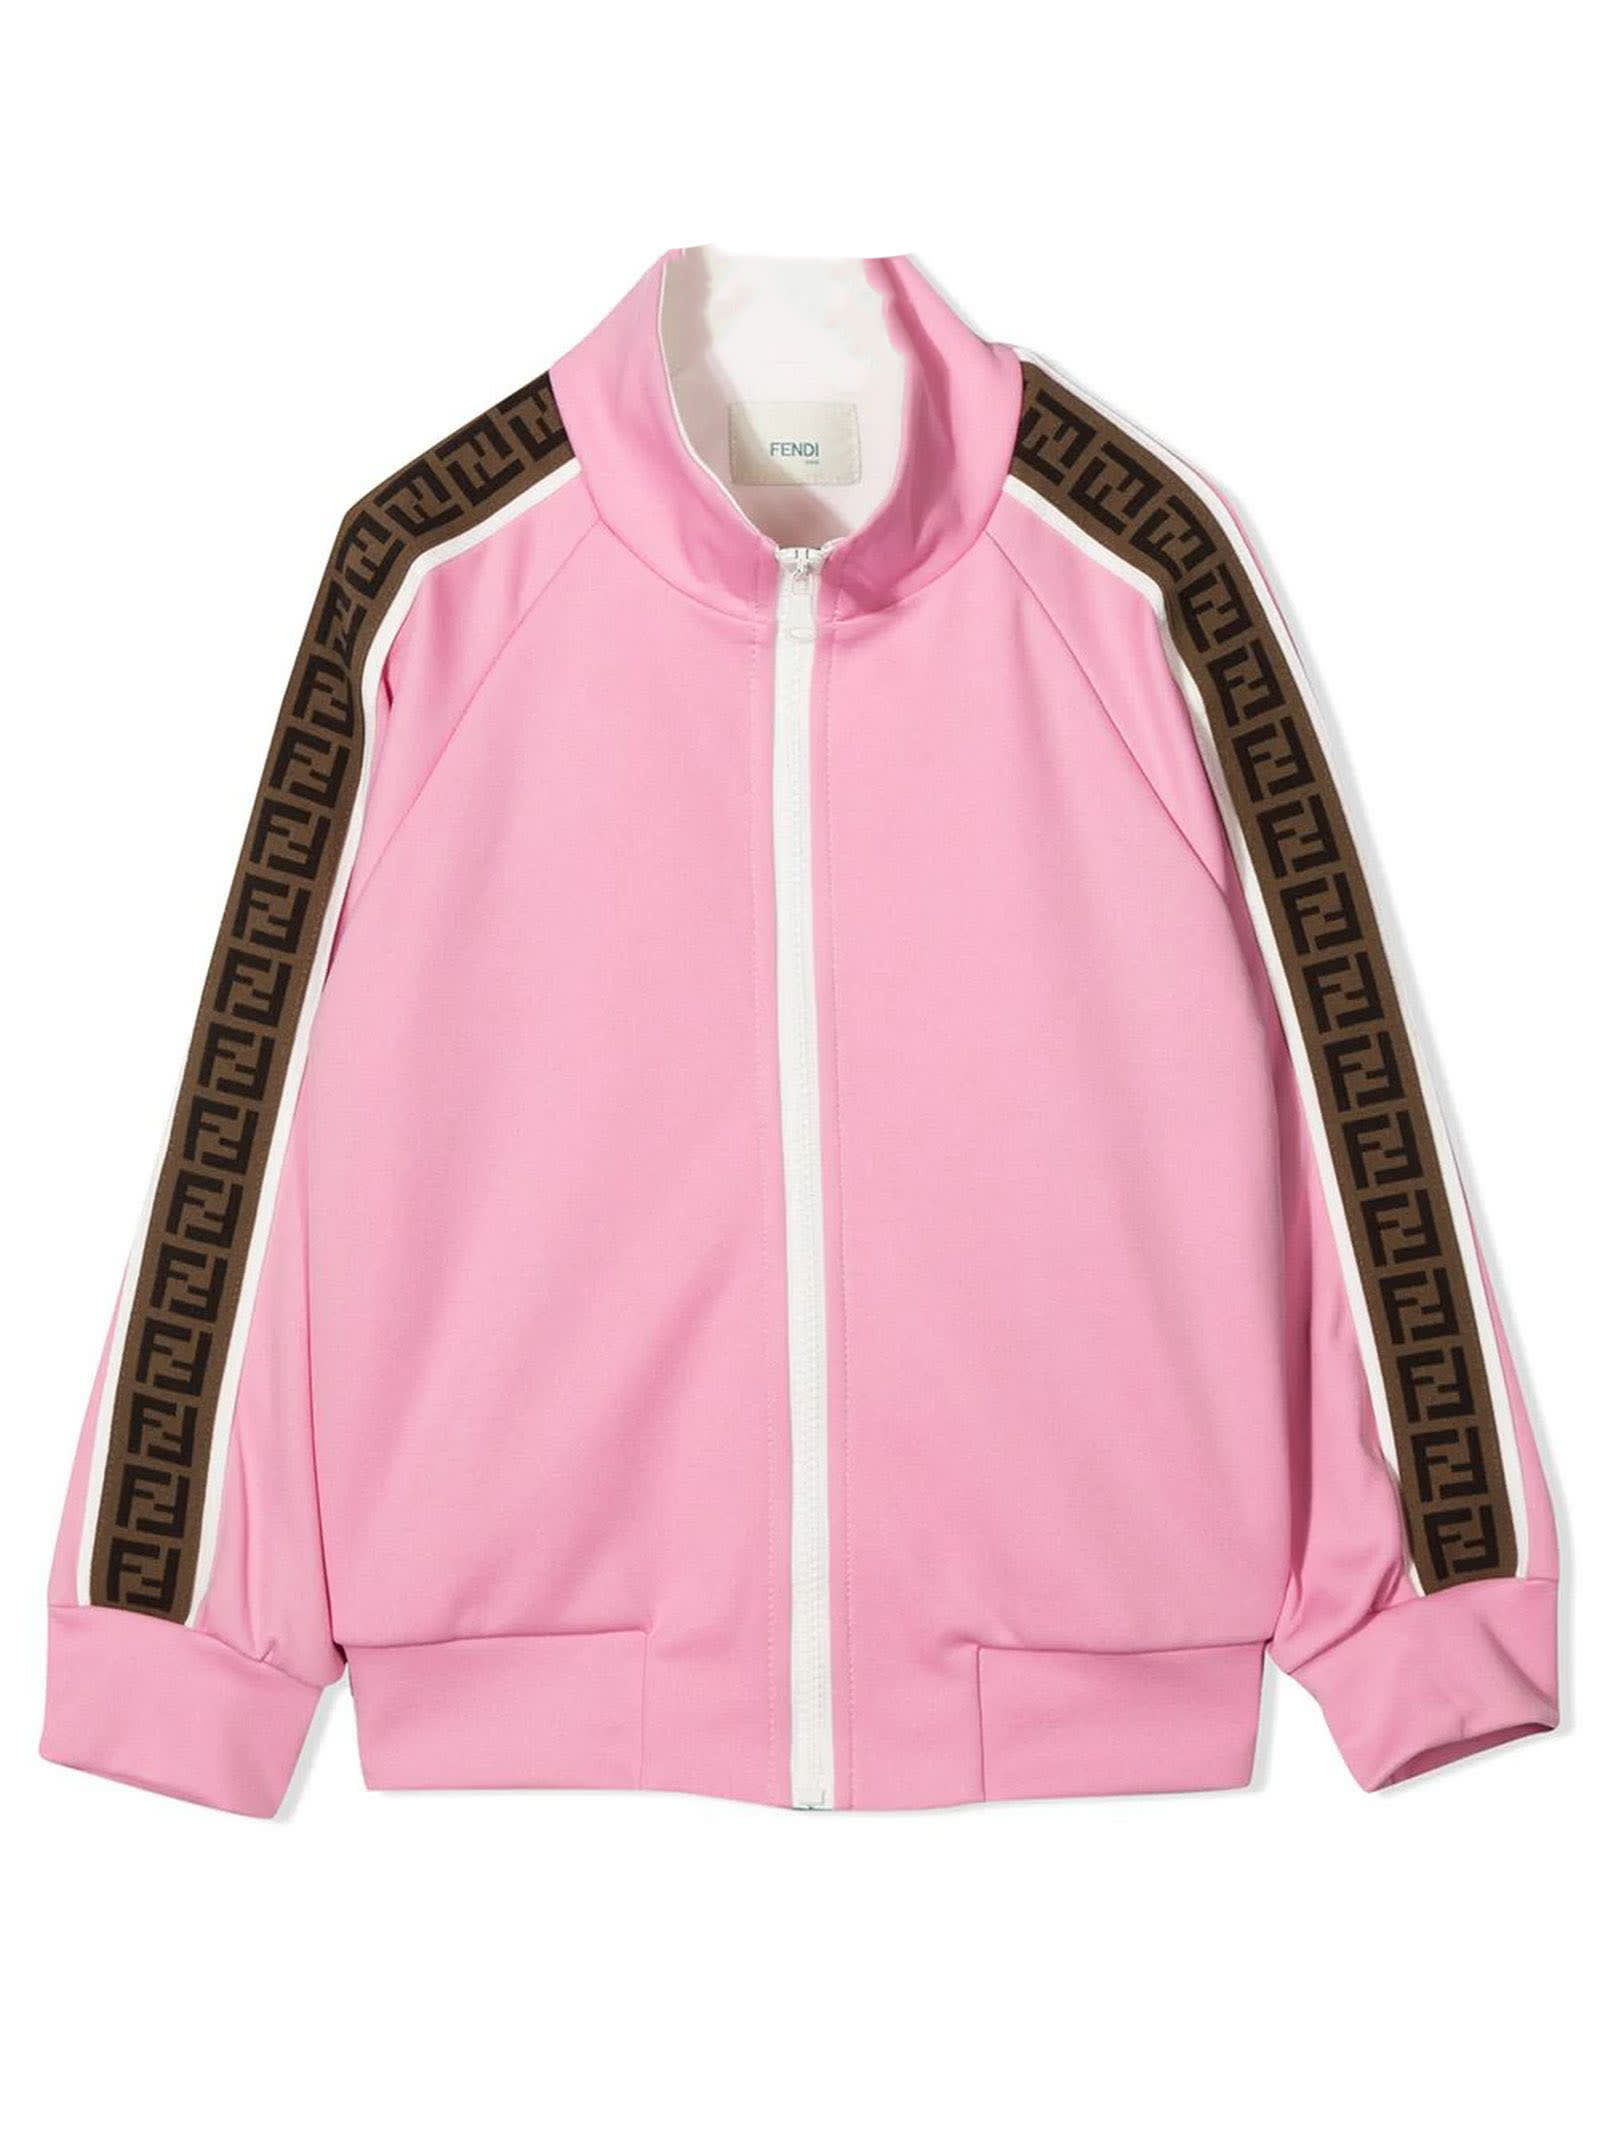 Fendi Pink Cotton Blend Track Jacket